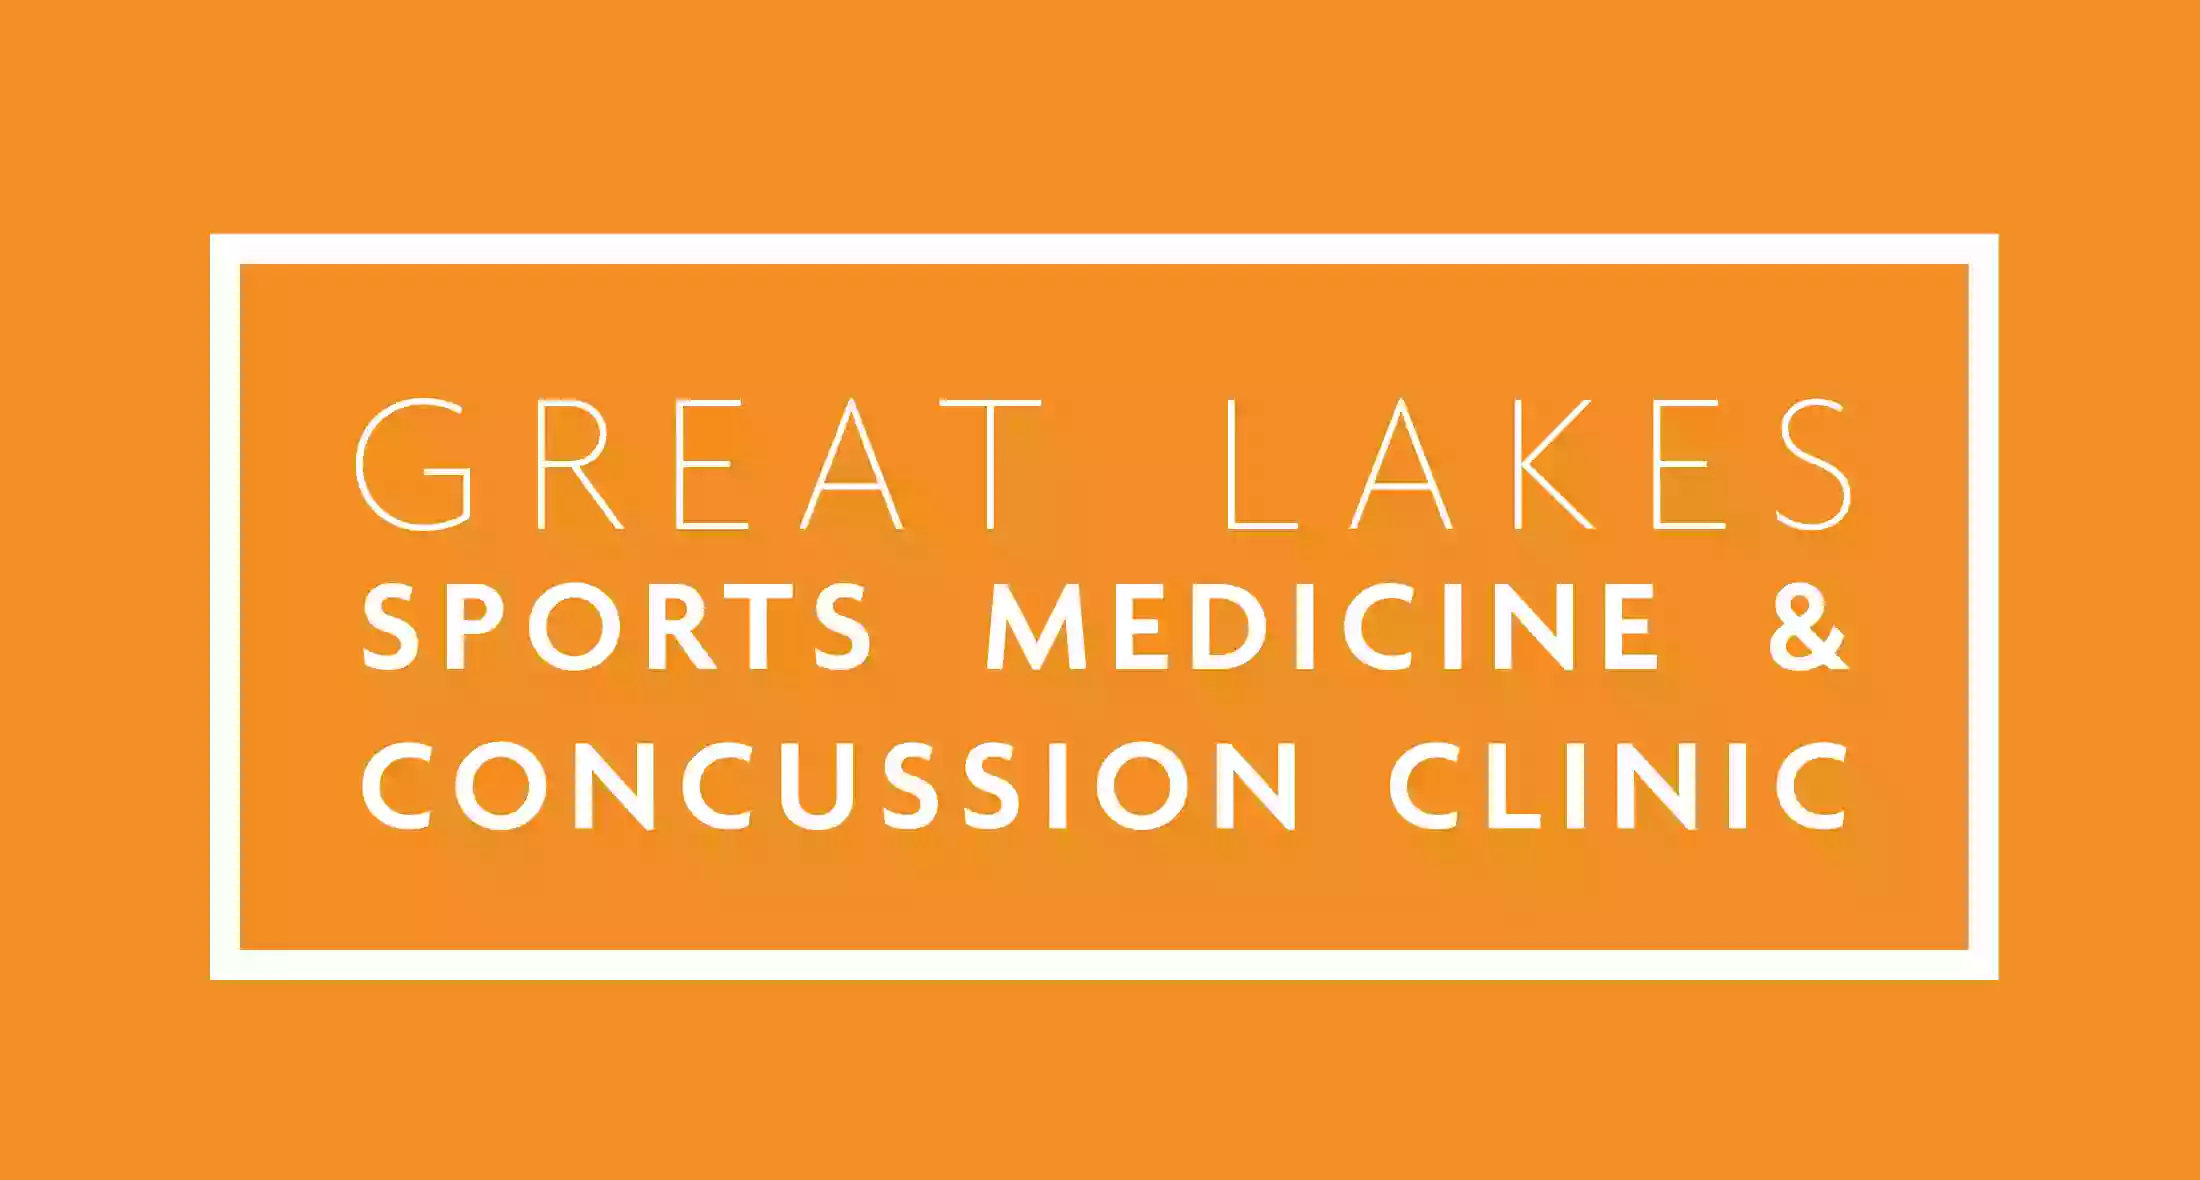 Great Lakes Sports Medicine & Concussion Clinic